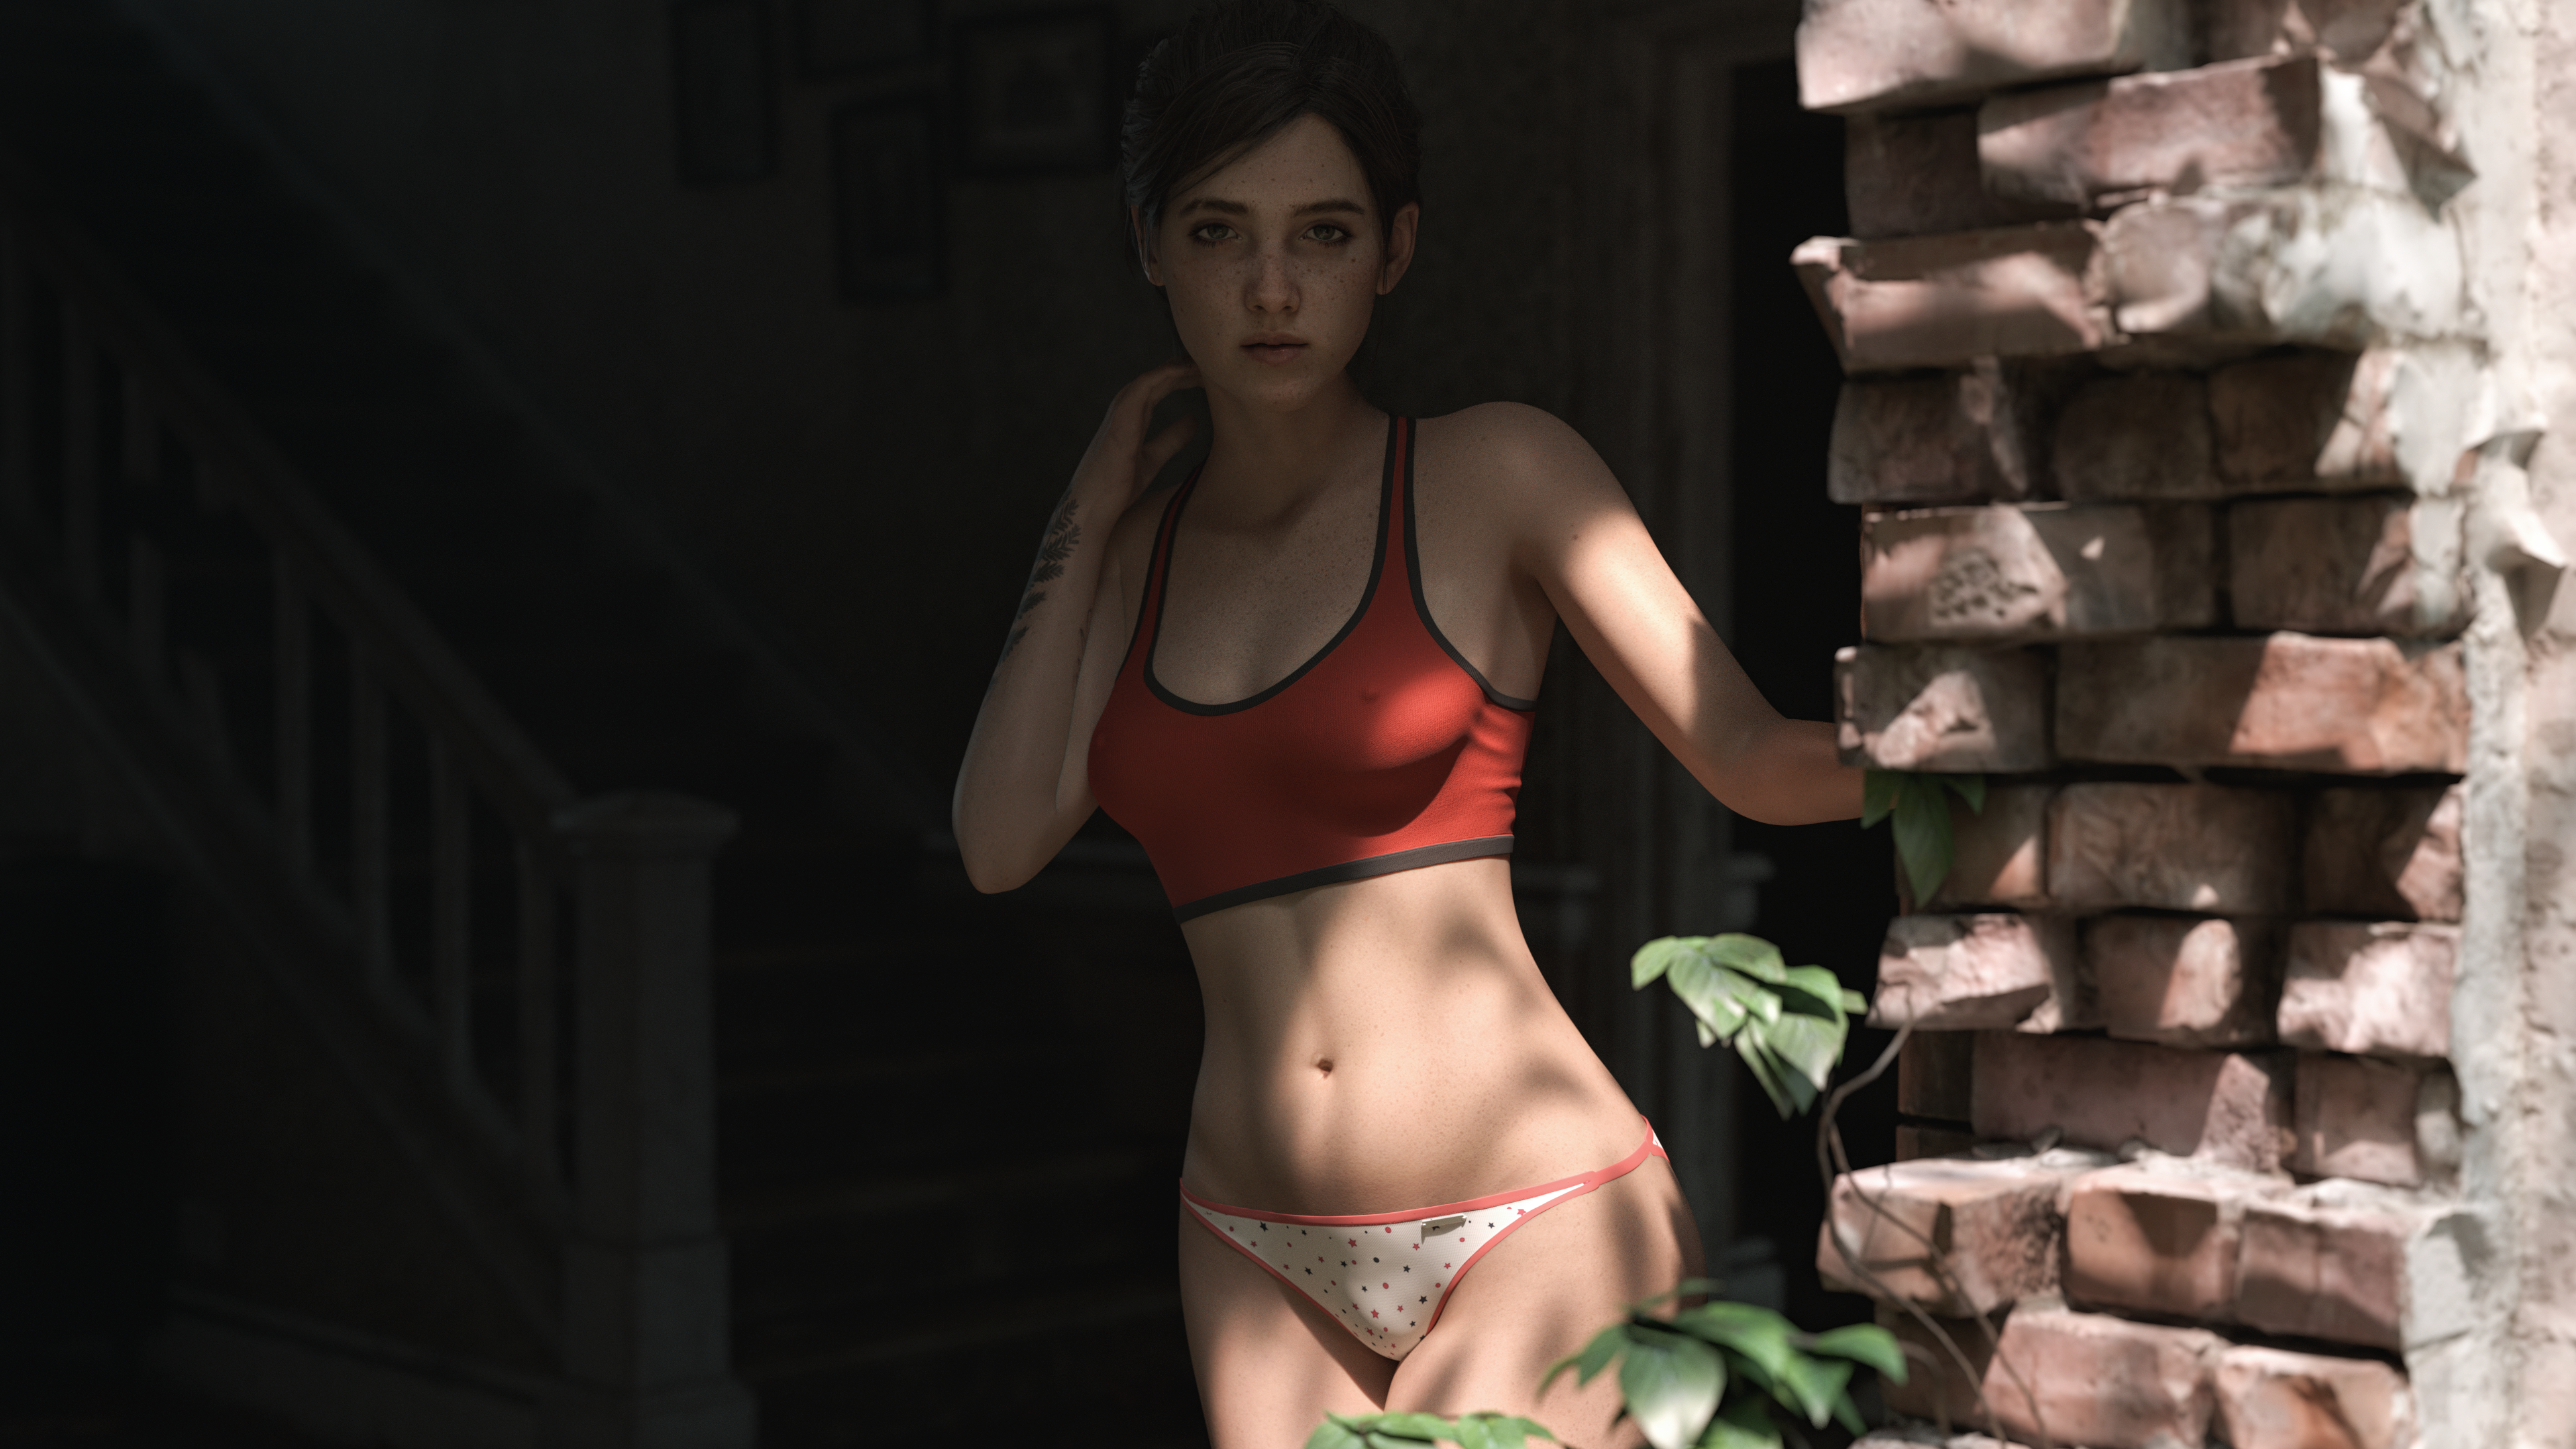 General 3840x2160 Ellie Williams The Last of Us video games video game girls underwear bra sports bra panties artwork CGI fan art HydraFXX